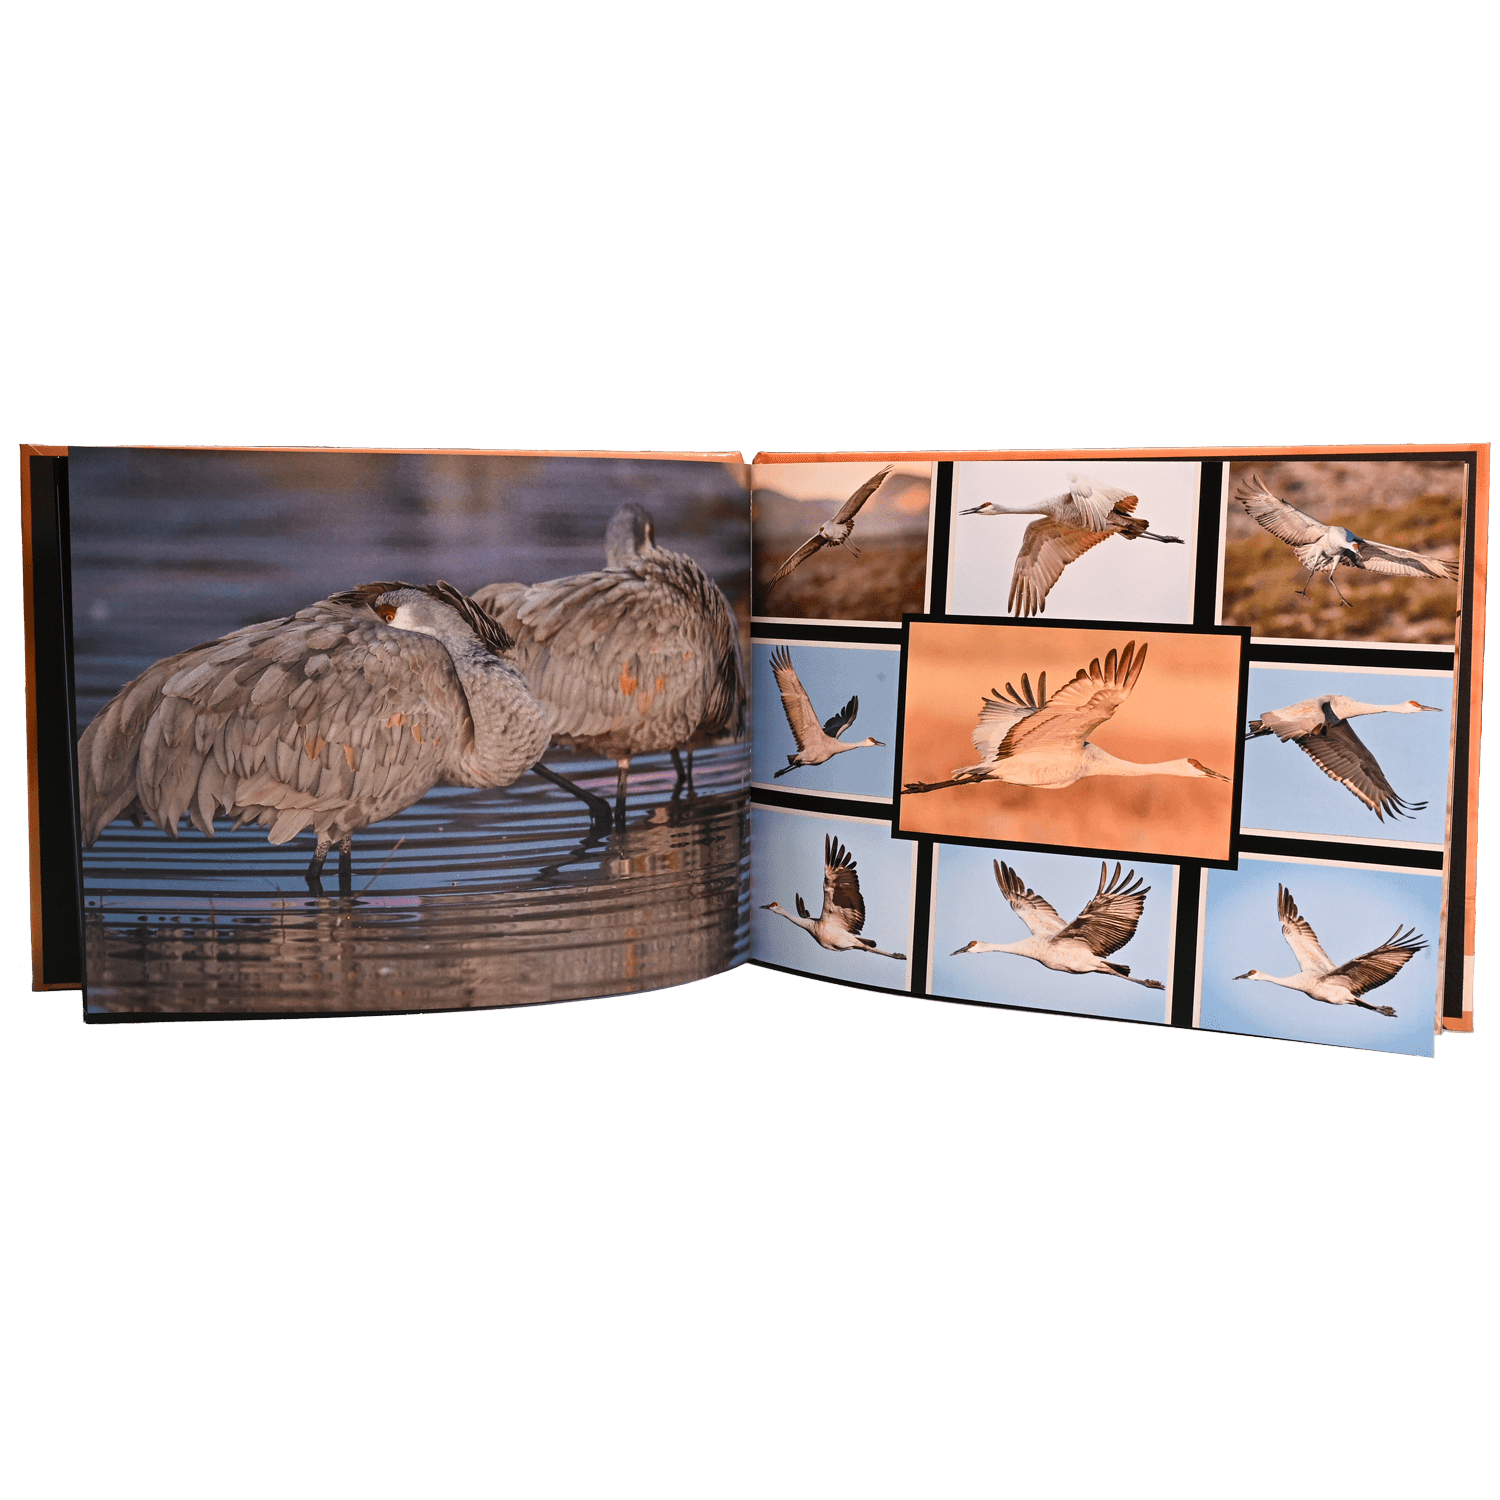 Sandhill Crane Reference Book - Images by Dan Verrips - Matuska Taxidermy Supply Company